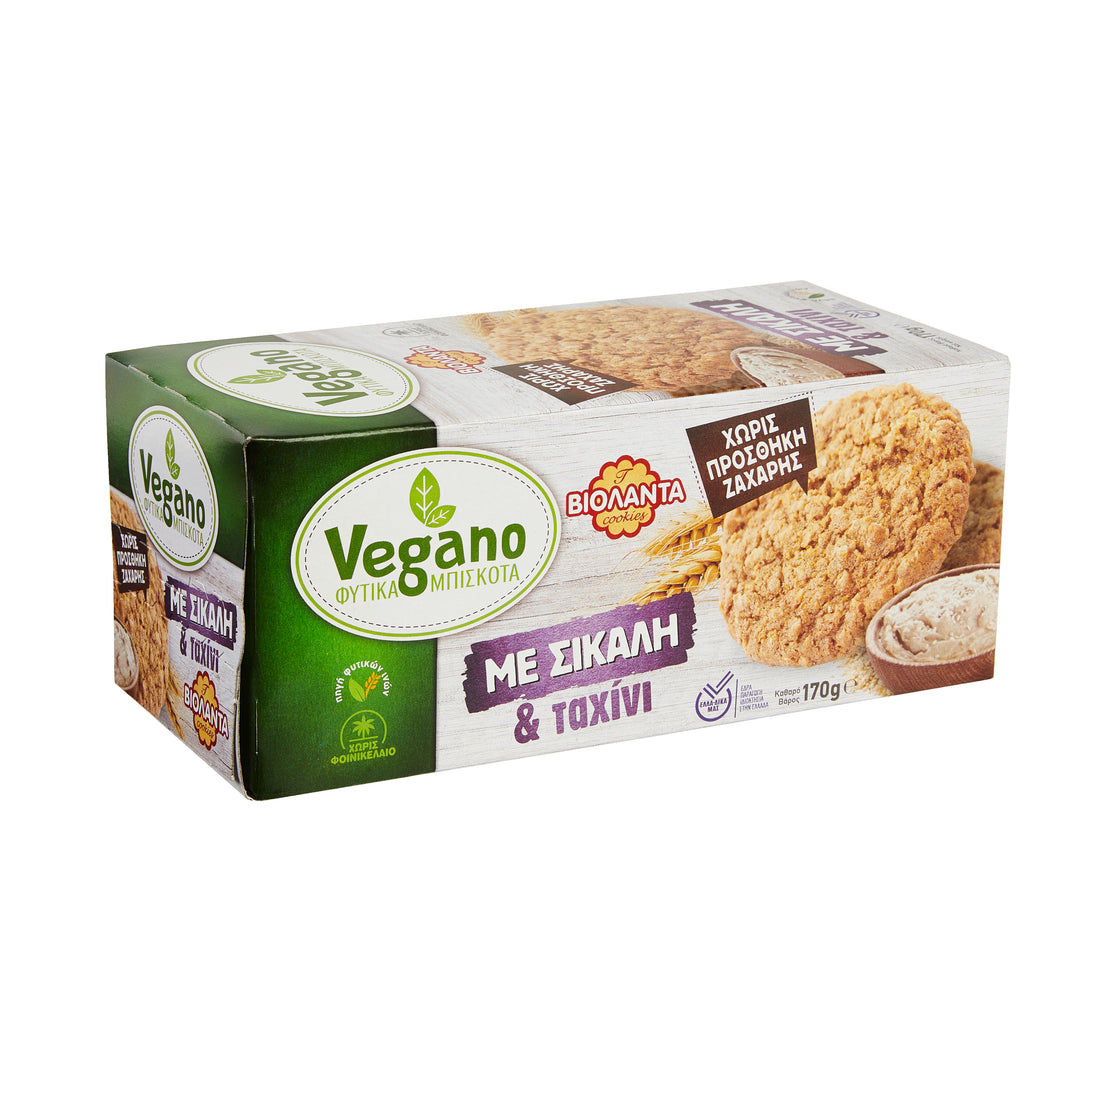 Vegano Kekse mit Roggen und Tachini Biolanta 170 g